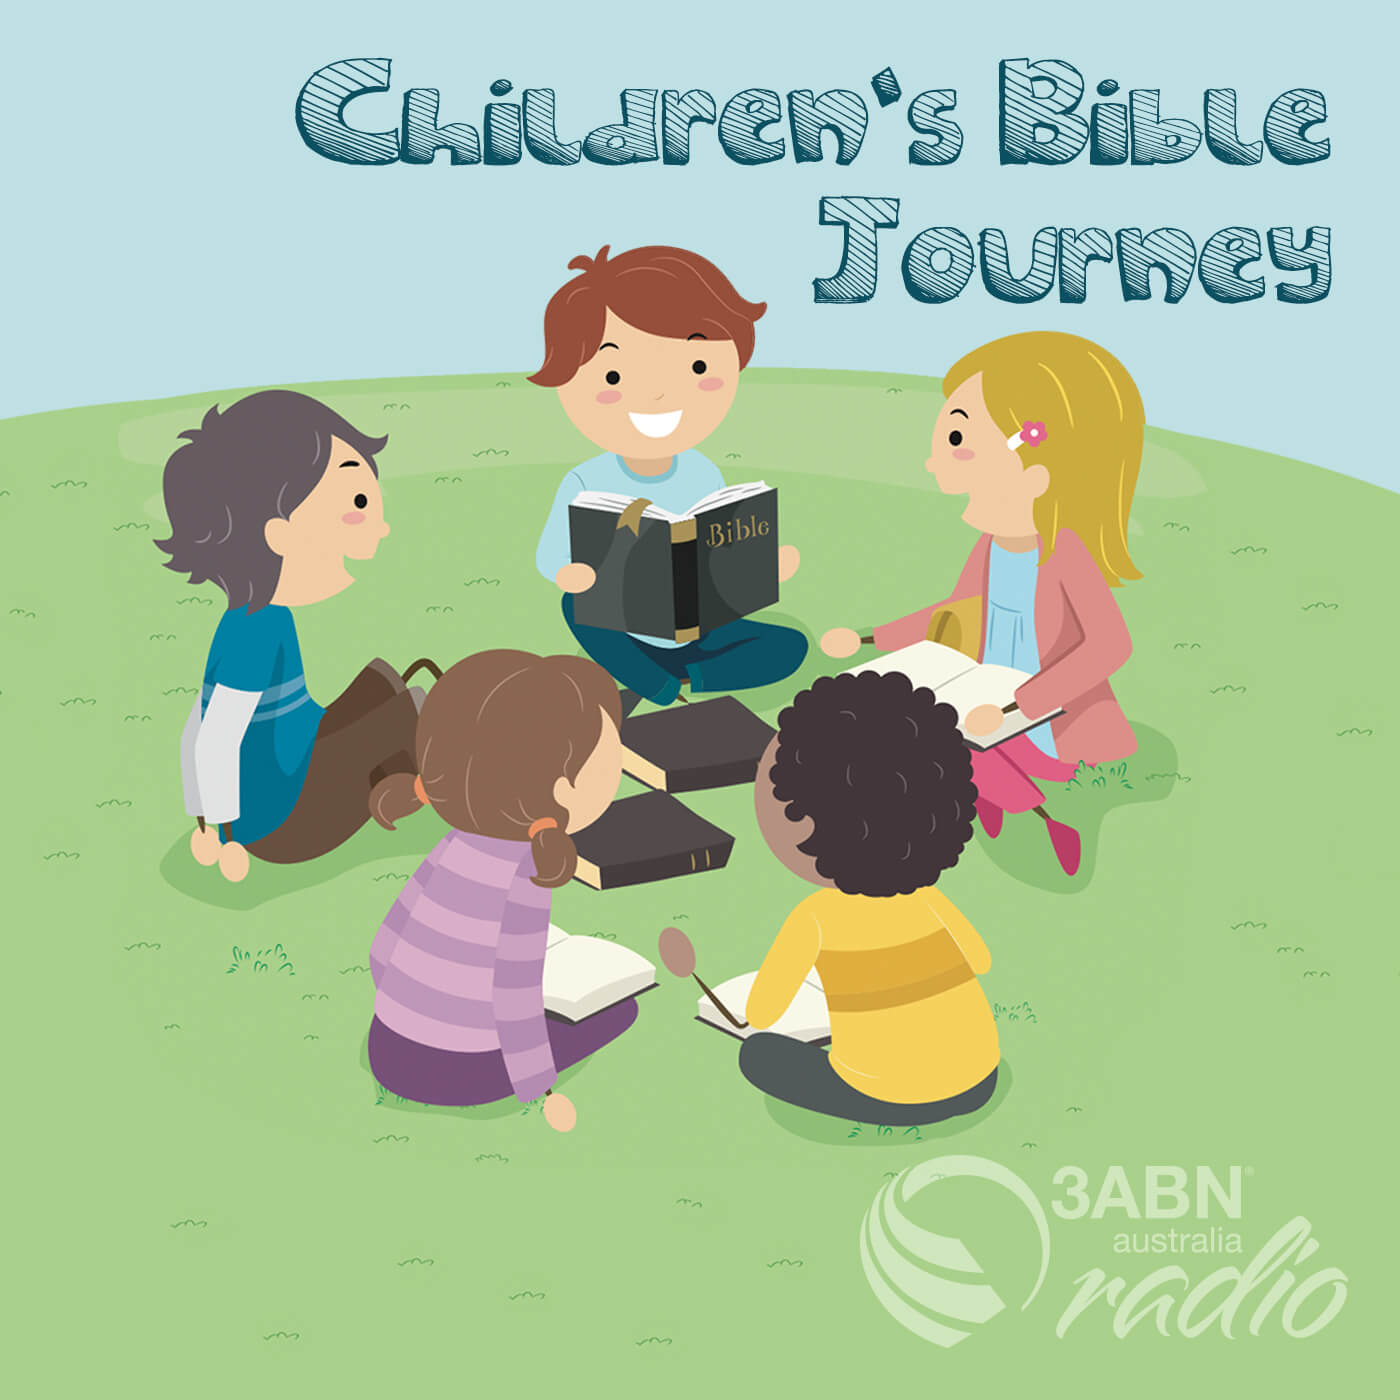 Children's Bible Journey - 2218